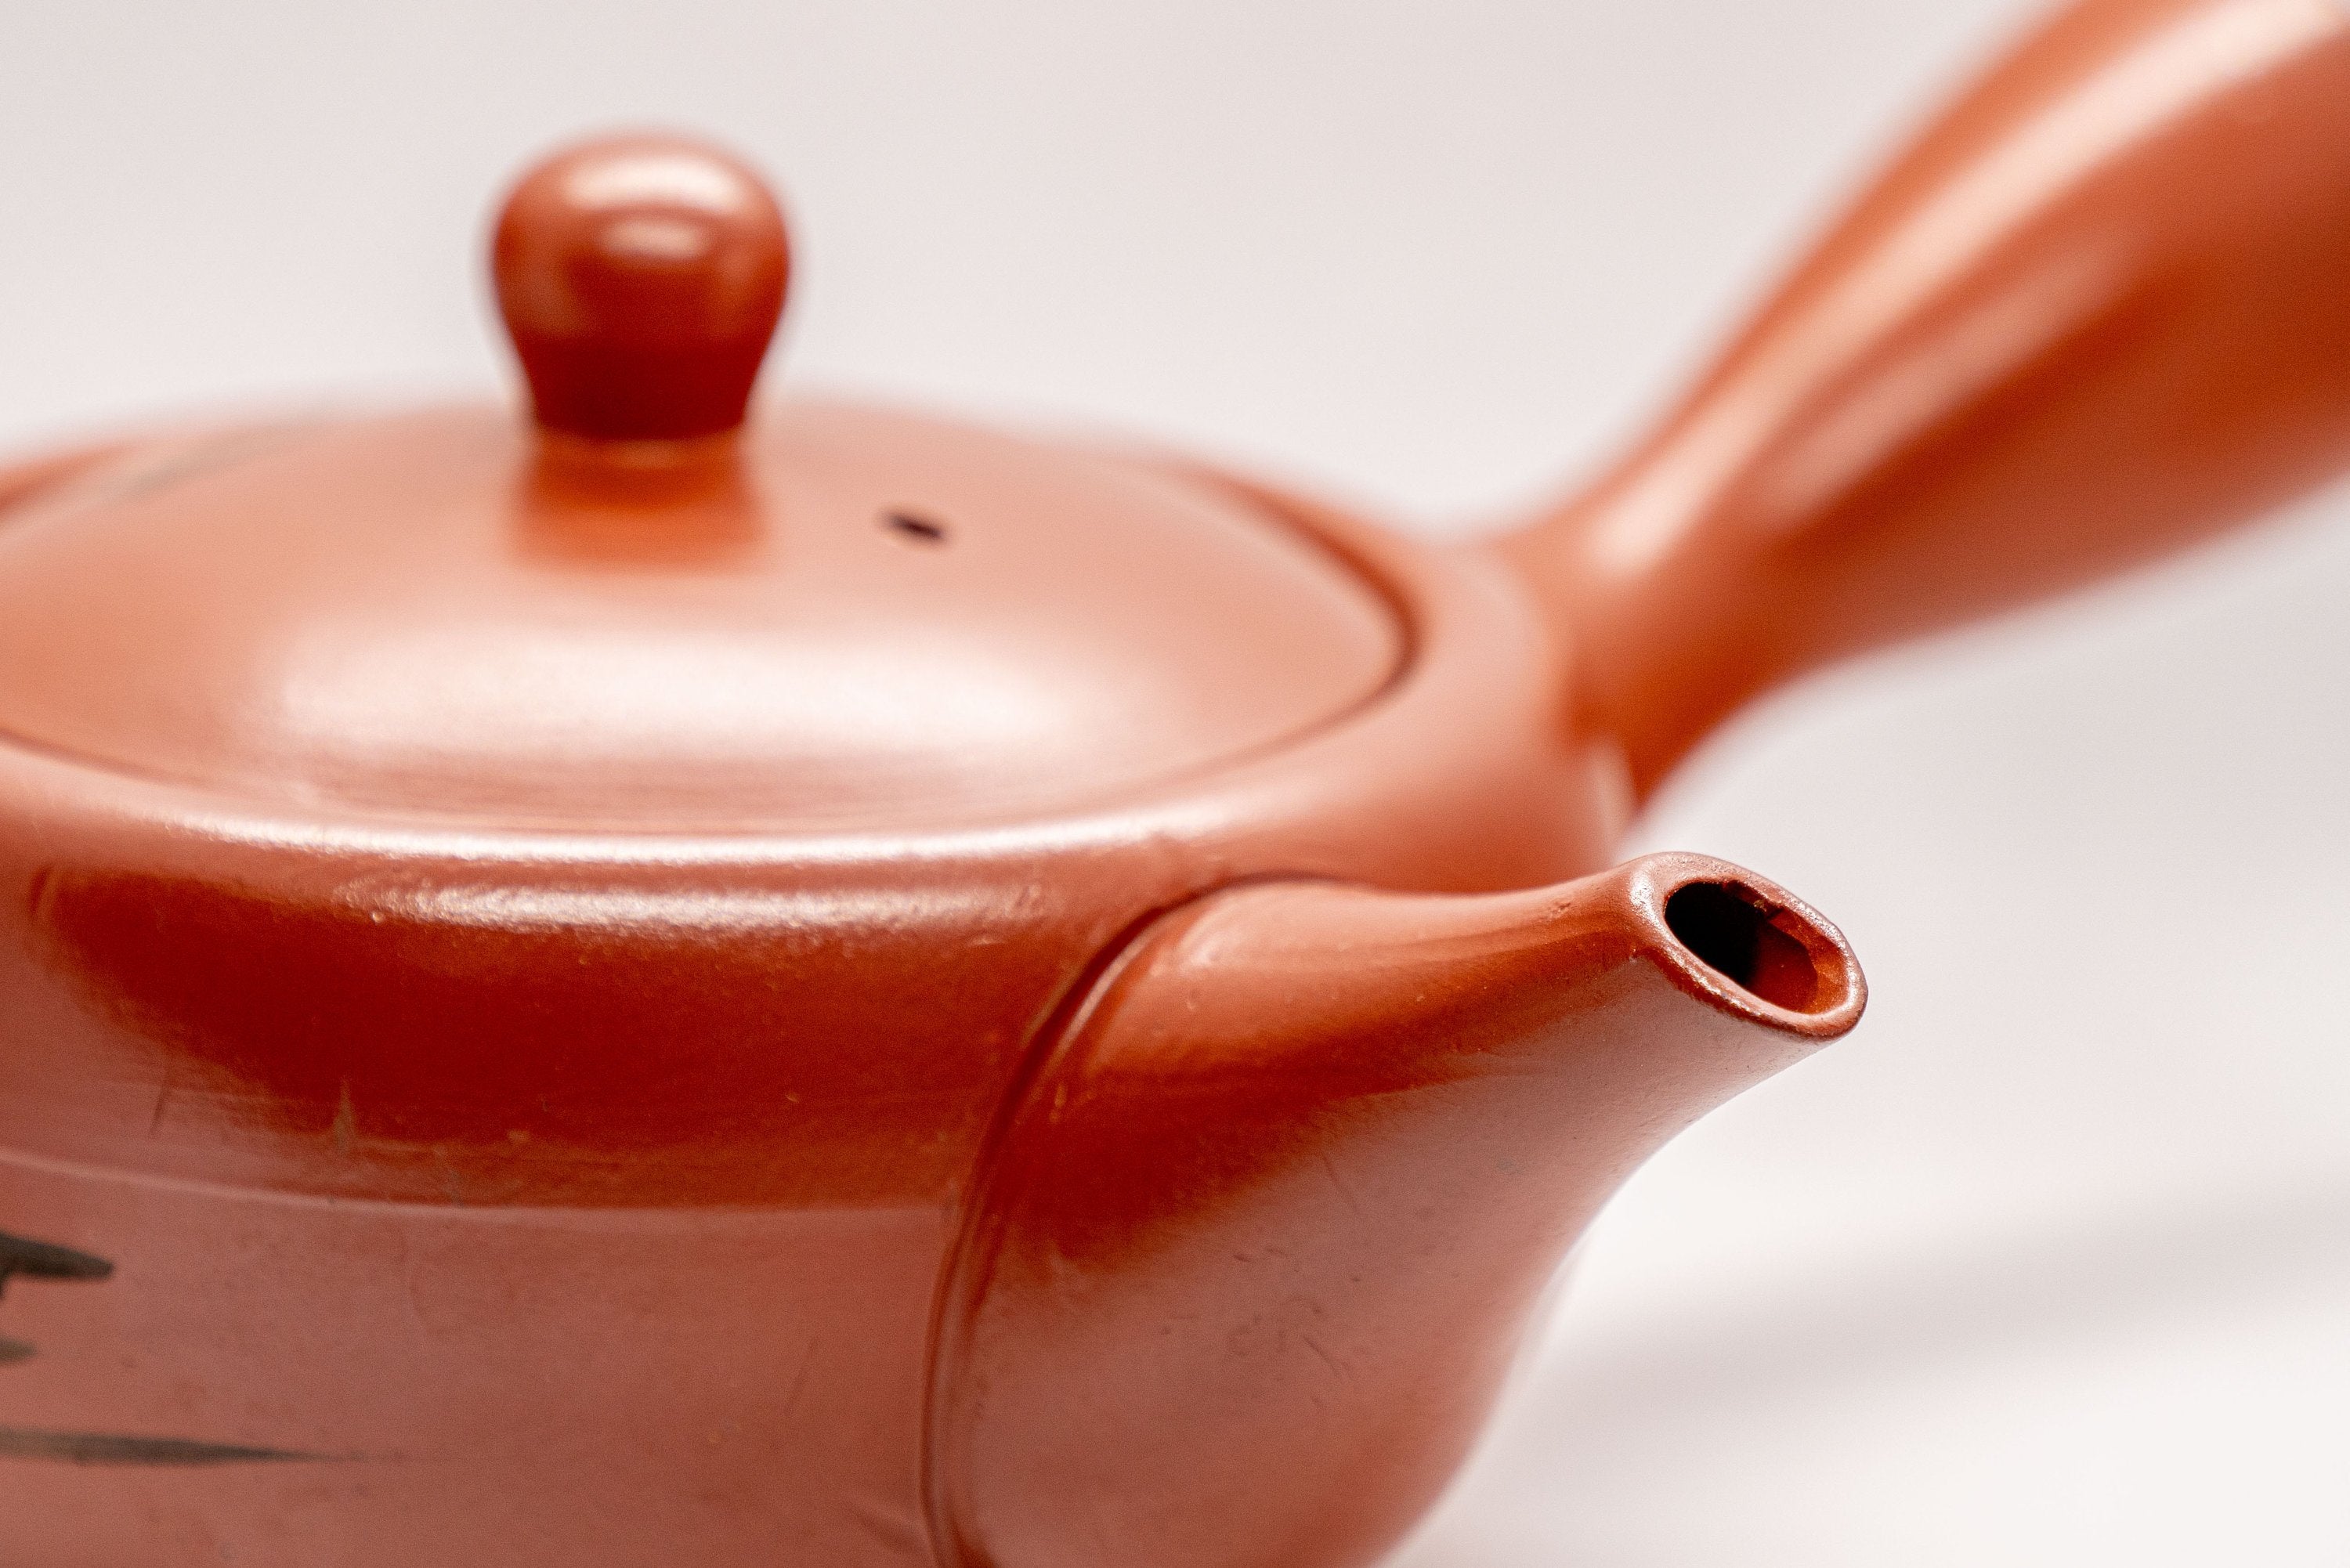 Japanese Kyusu - Tokoname-yaki Ceramic Teapot with Mesh Strainer - 225ml